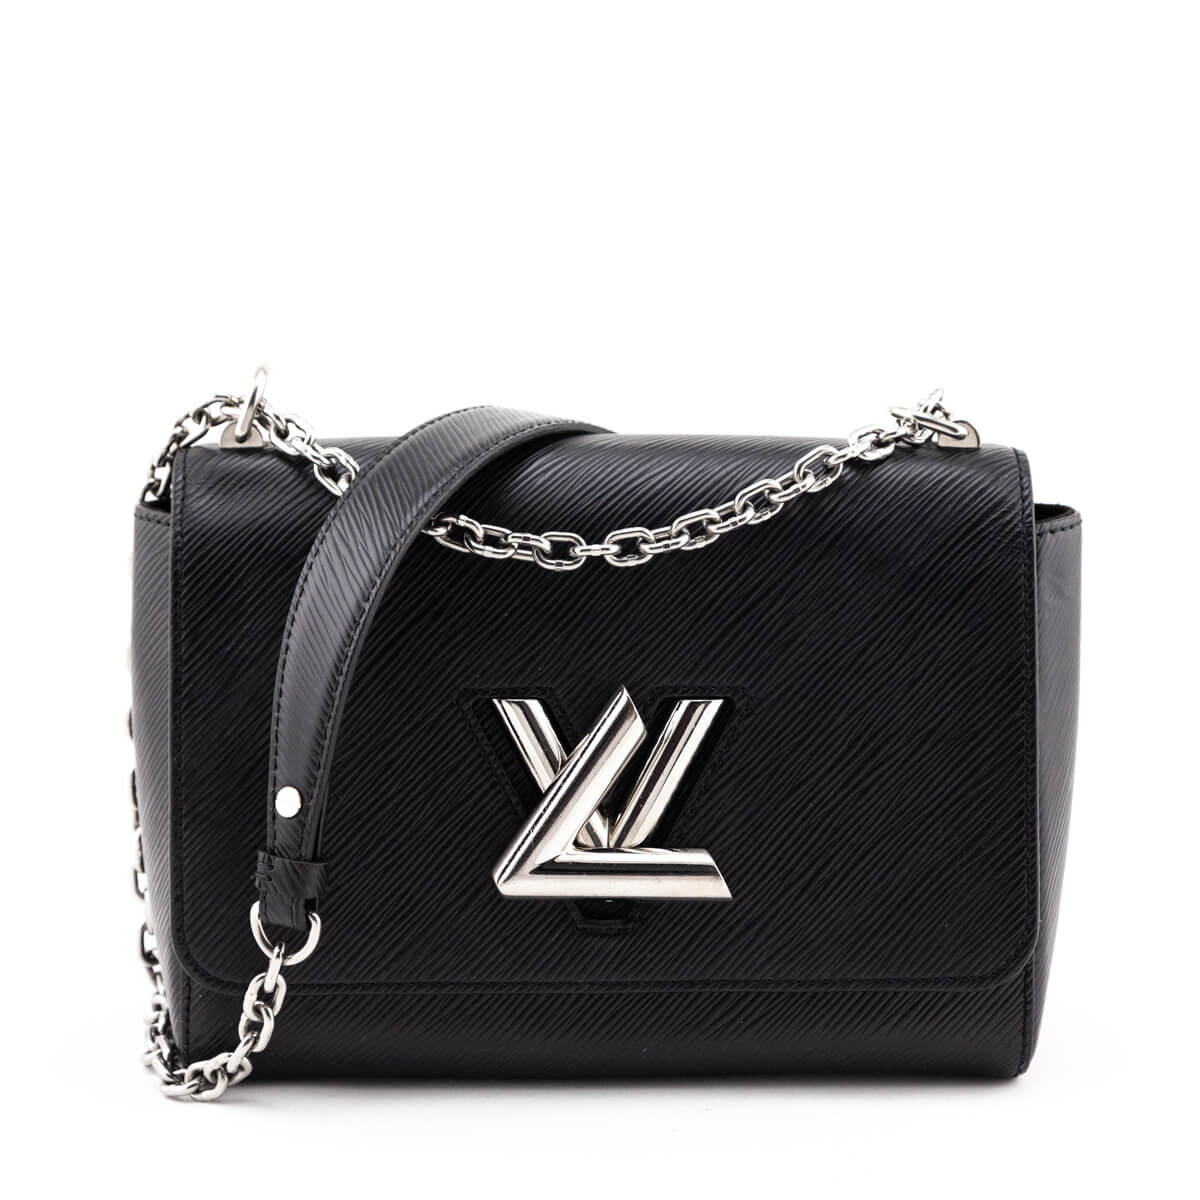 100% Authentic Luxury Goods - Like new LV twist MM black epi